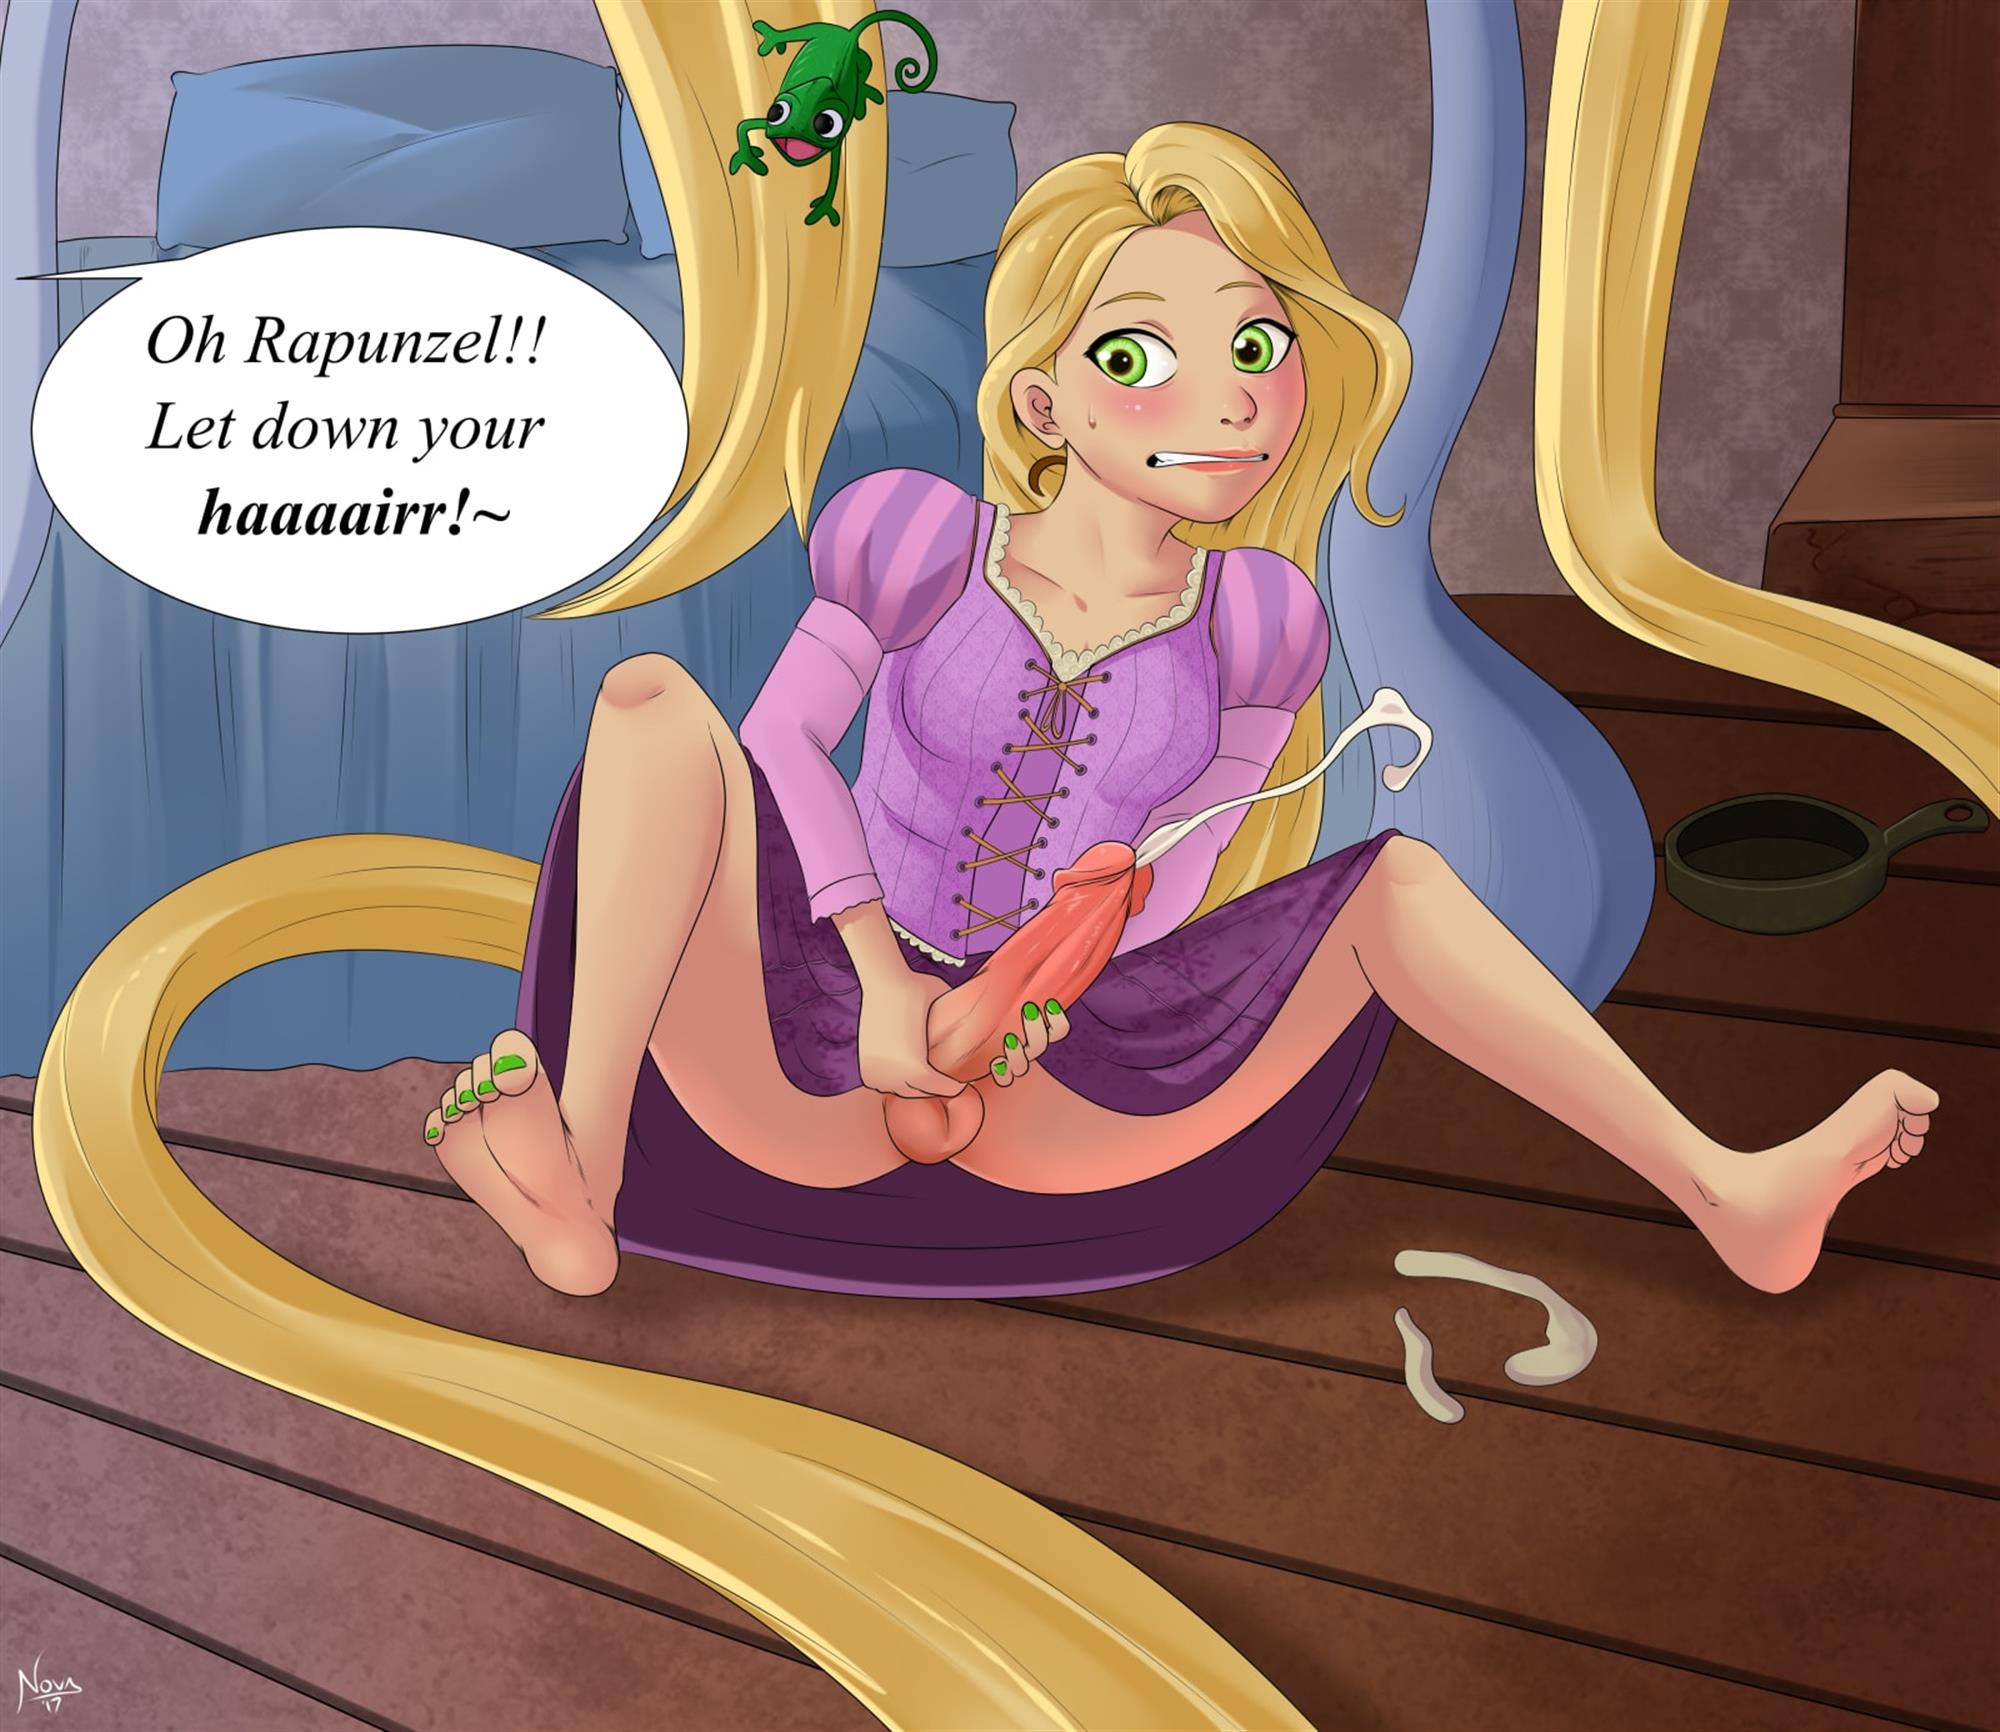 Not enough Rapunzel futanari so i found some really nice regular porn. 